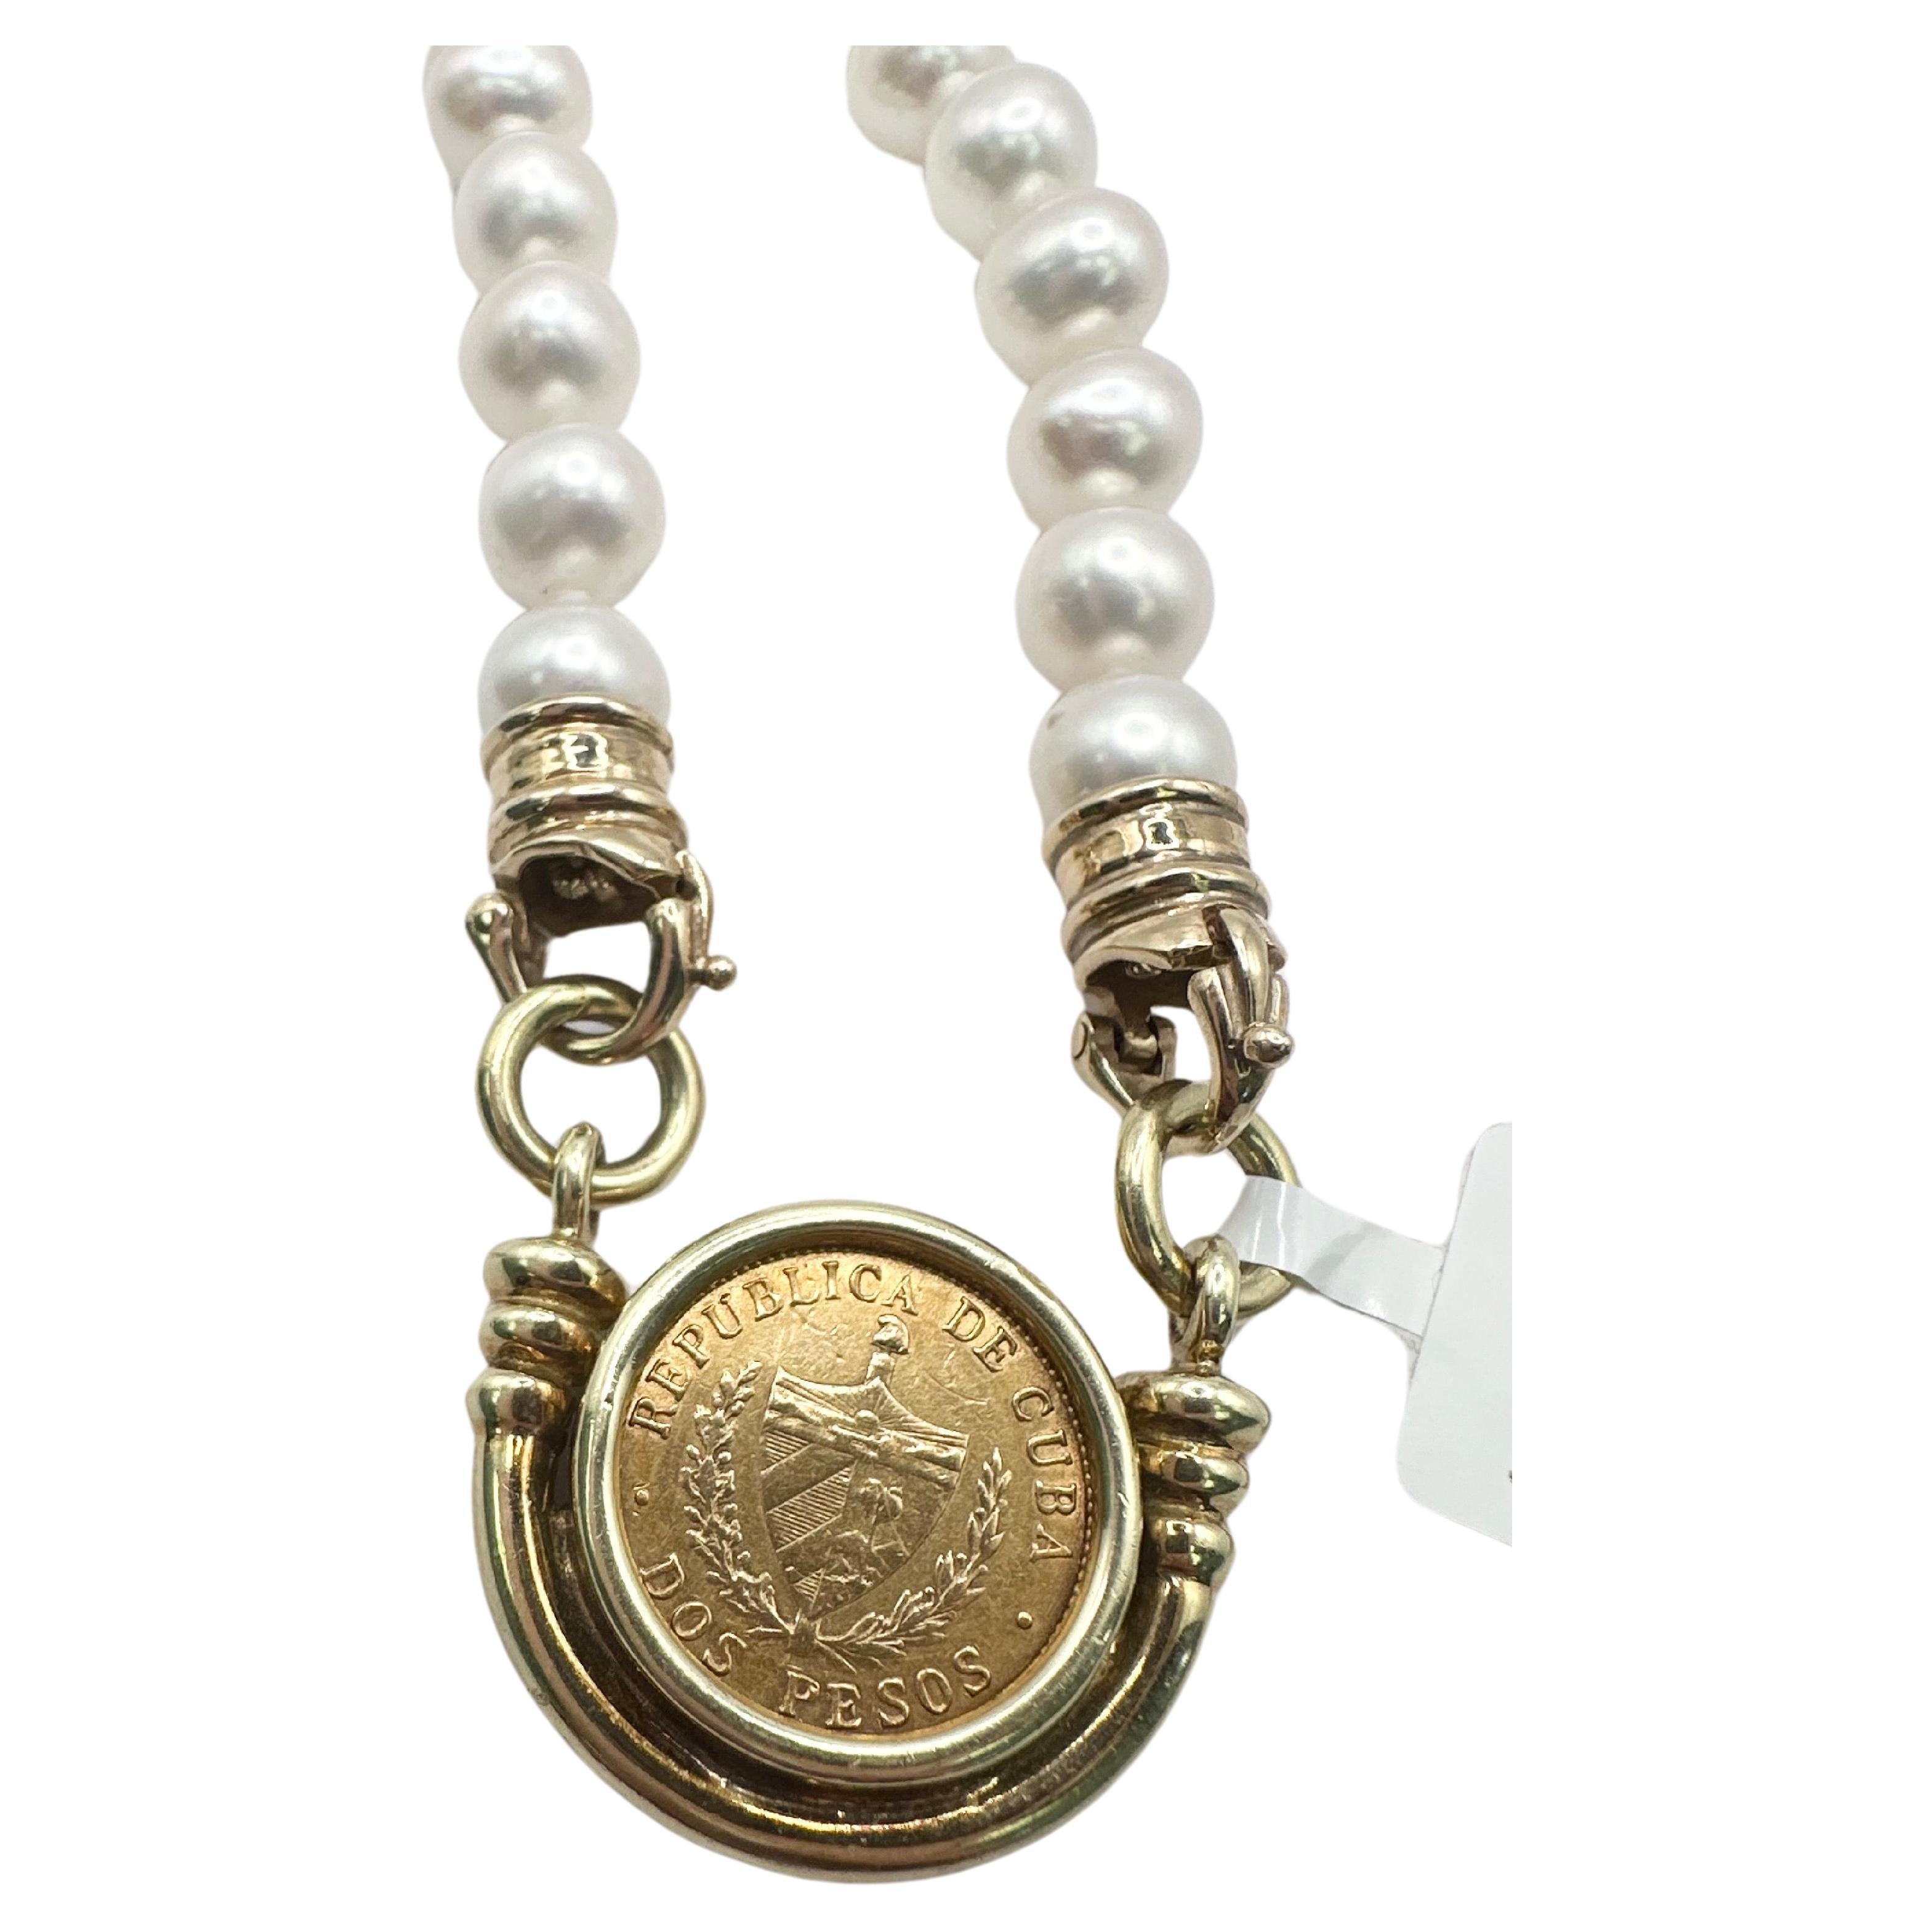 2 pesos necklace 14KT solid gold coin necklace republica de cuba 17 inches For Sale